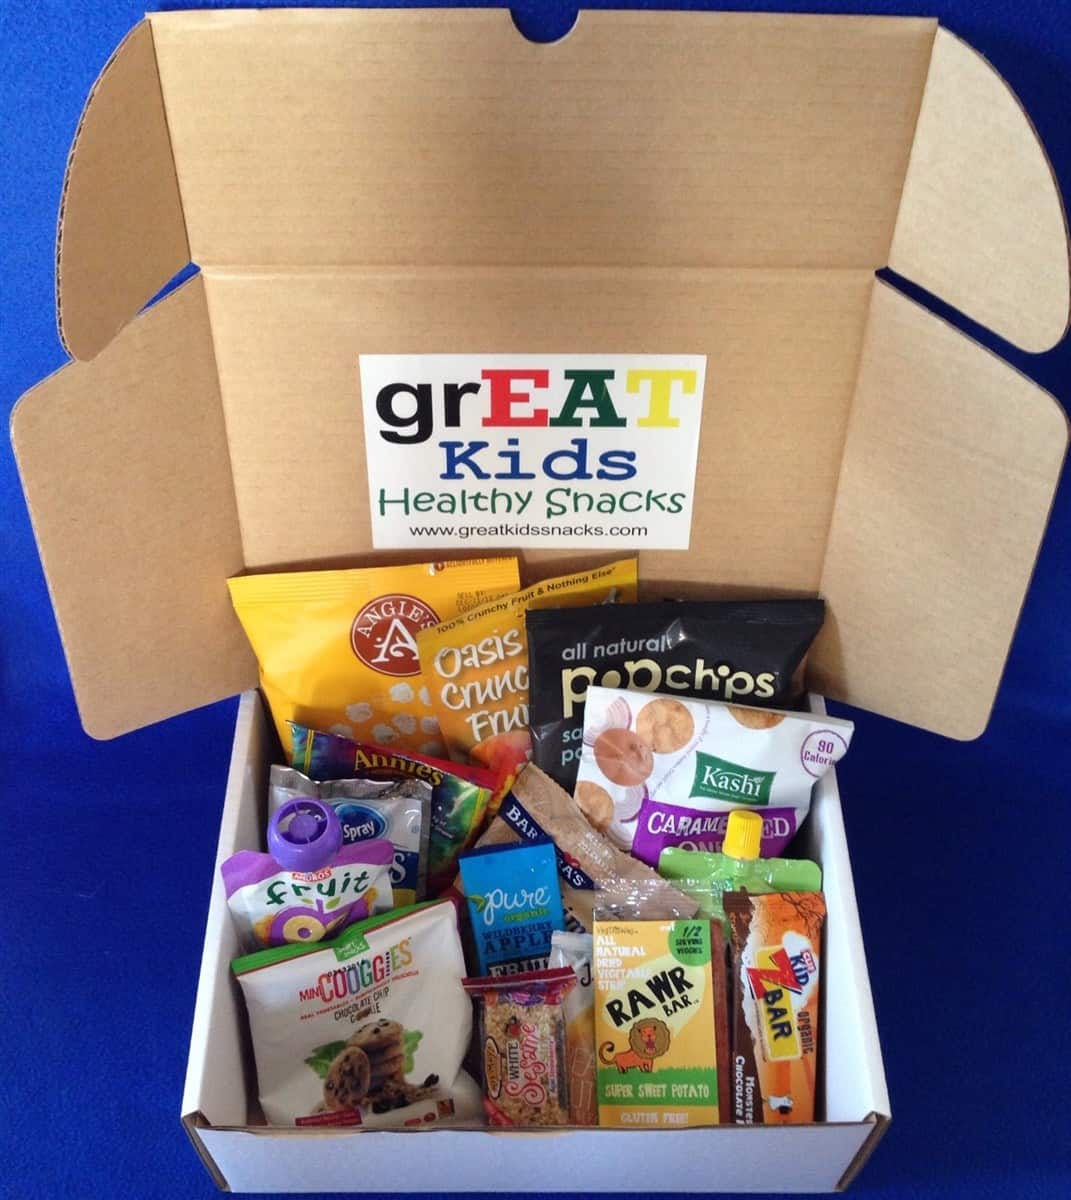 https://www.findsubscriptionboxes.com/wp-content/uploads/2014/06/GREAT-kids-snack-box-1.jpg